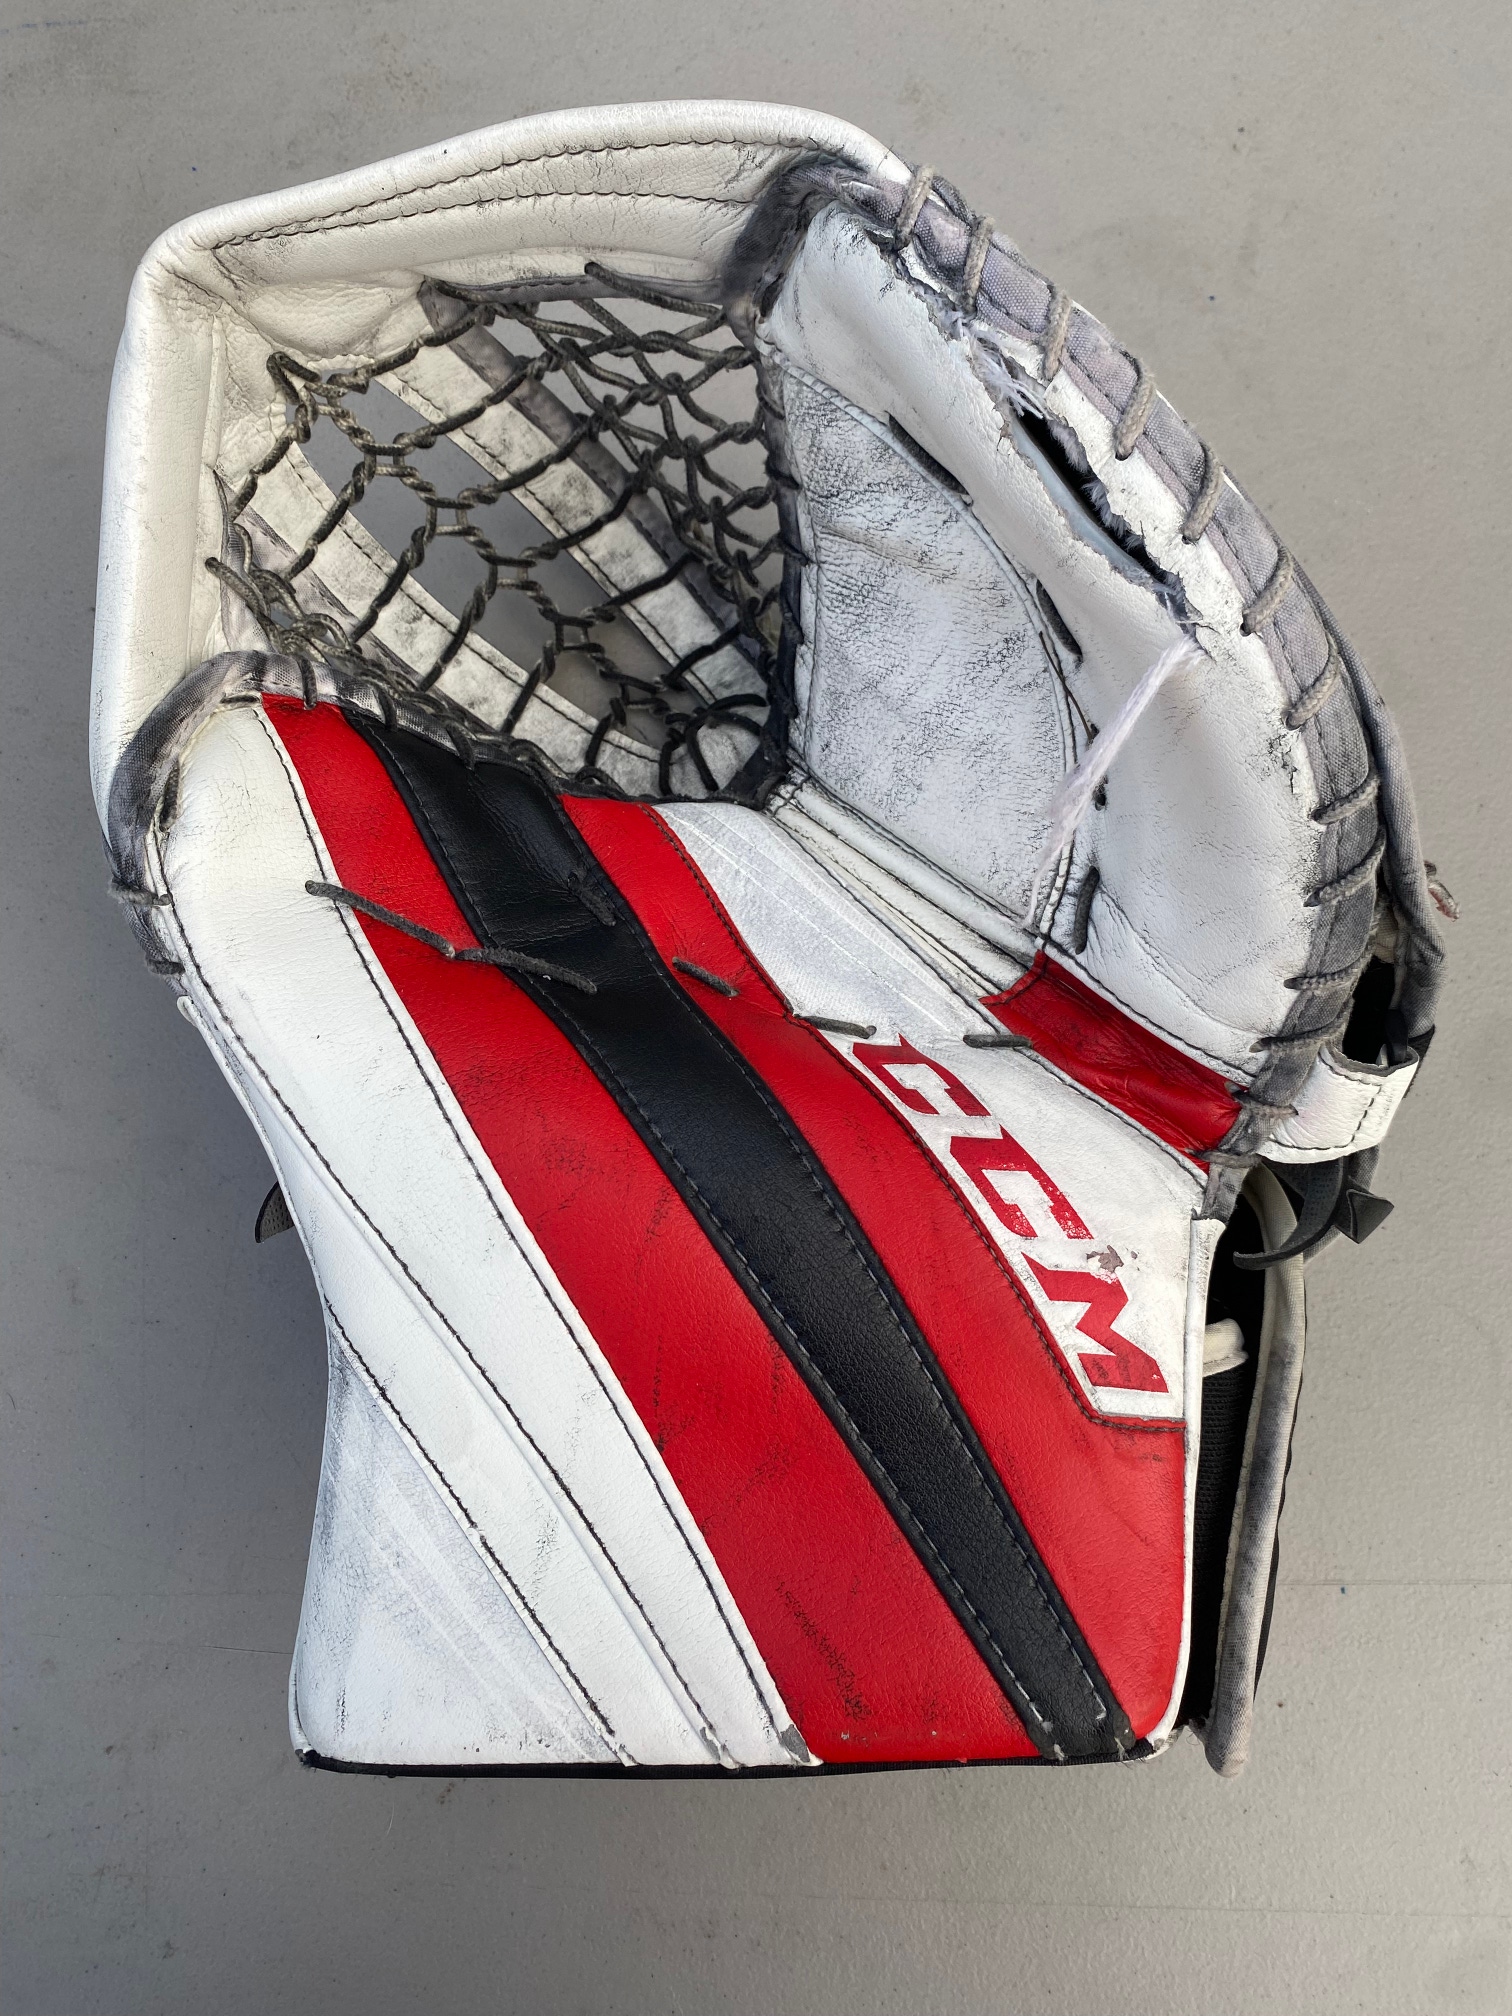 CCM EXTREME FLEX 5 Pro Stock Goalie Glove 600 Blackhawks MORRIS 3570